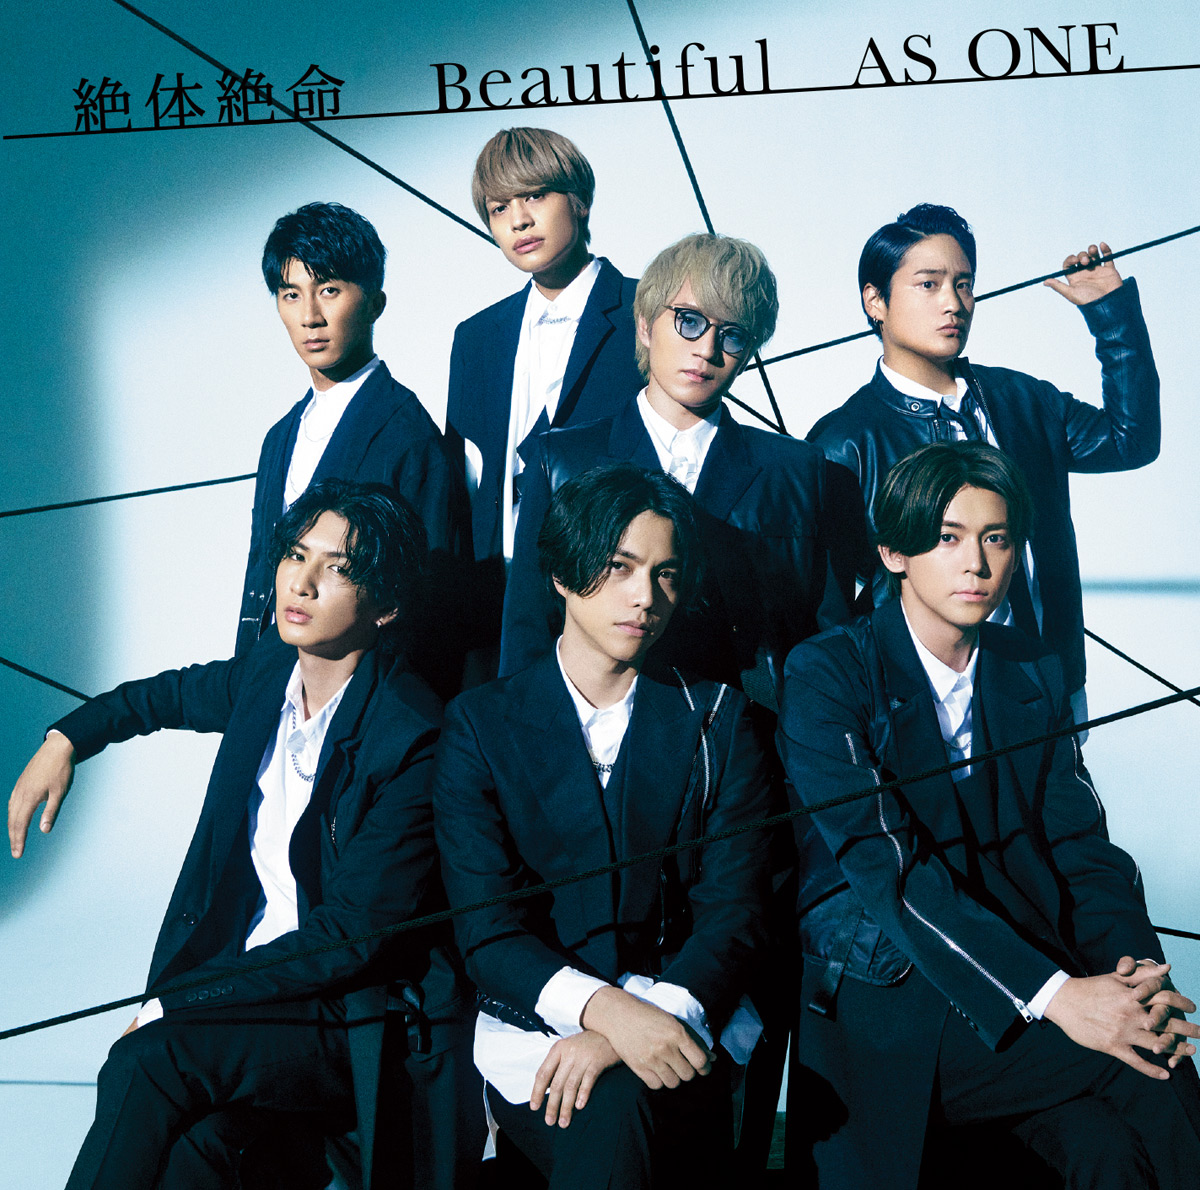 WEST.　「絶体絶命／Beautiful／AS ONE」グループ初のトリプルA面シングルが初登場1位